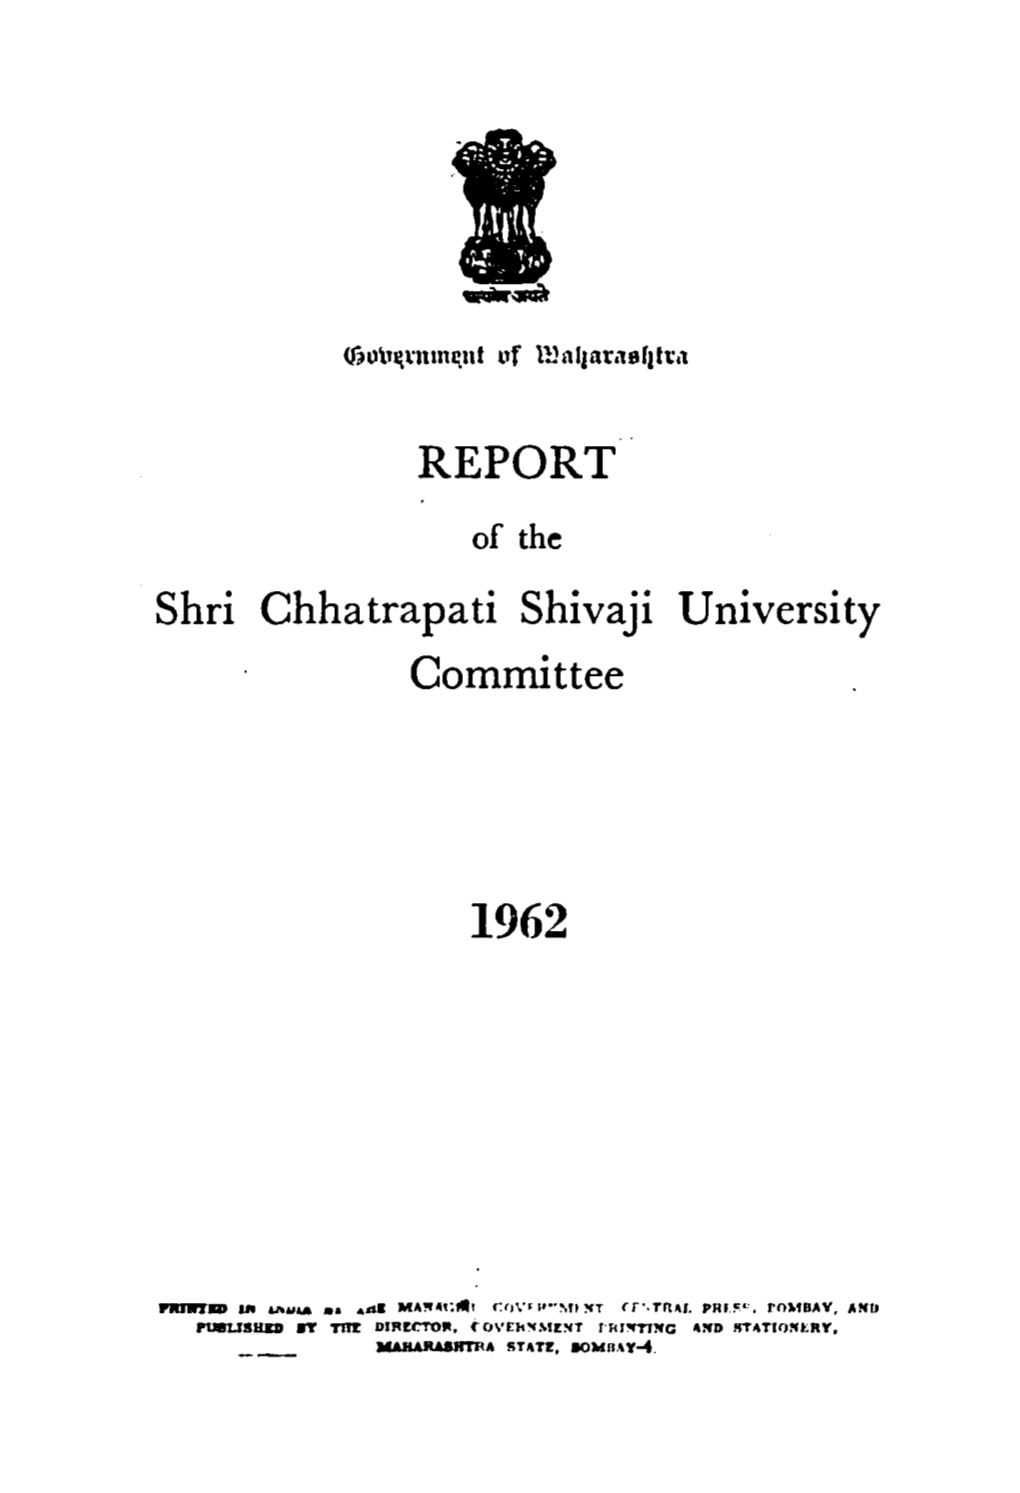 Shri Chhatrapati Shivaji University Committee